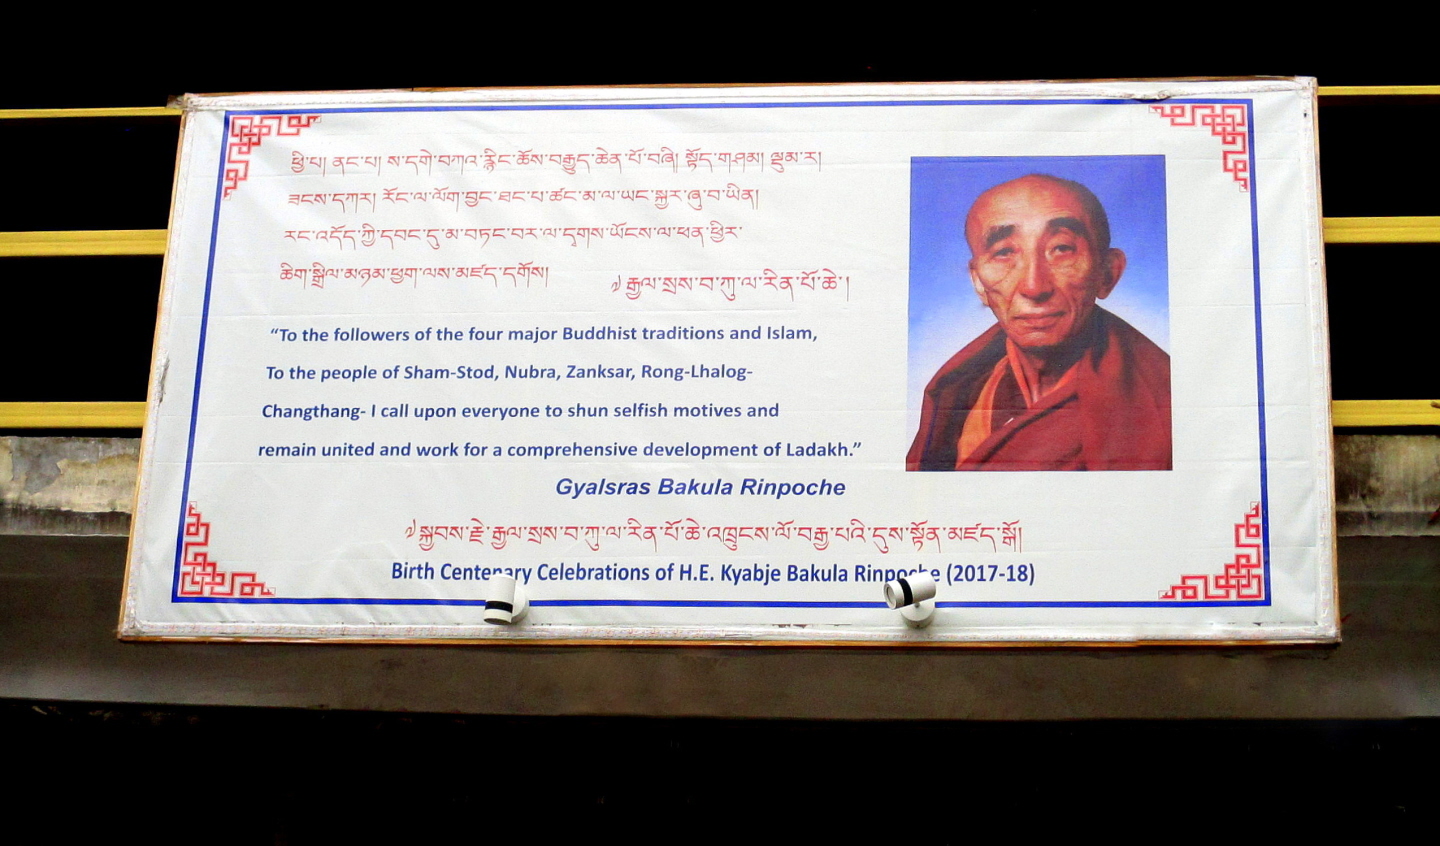 H.E. Kyabje Bakula Rinpoche